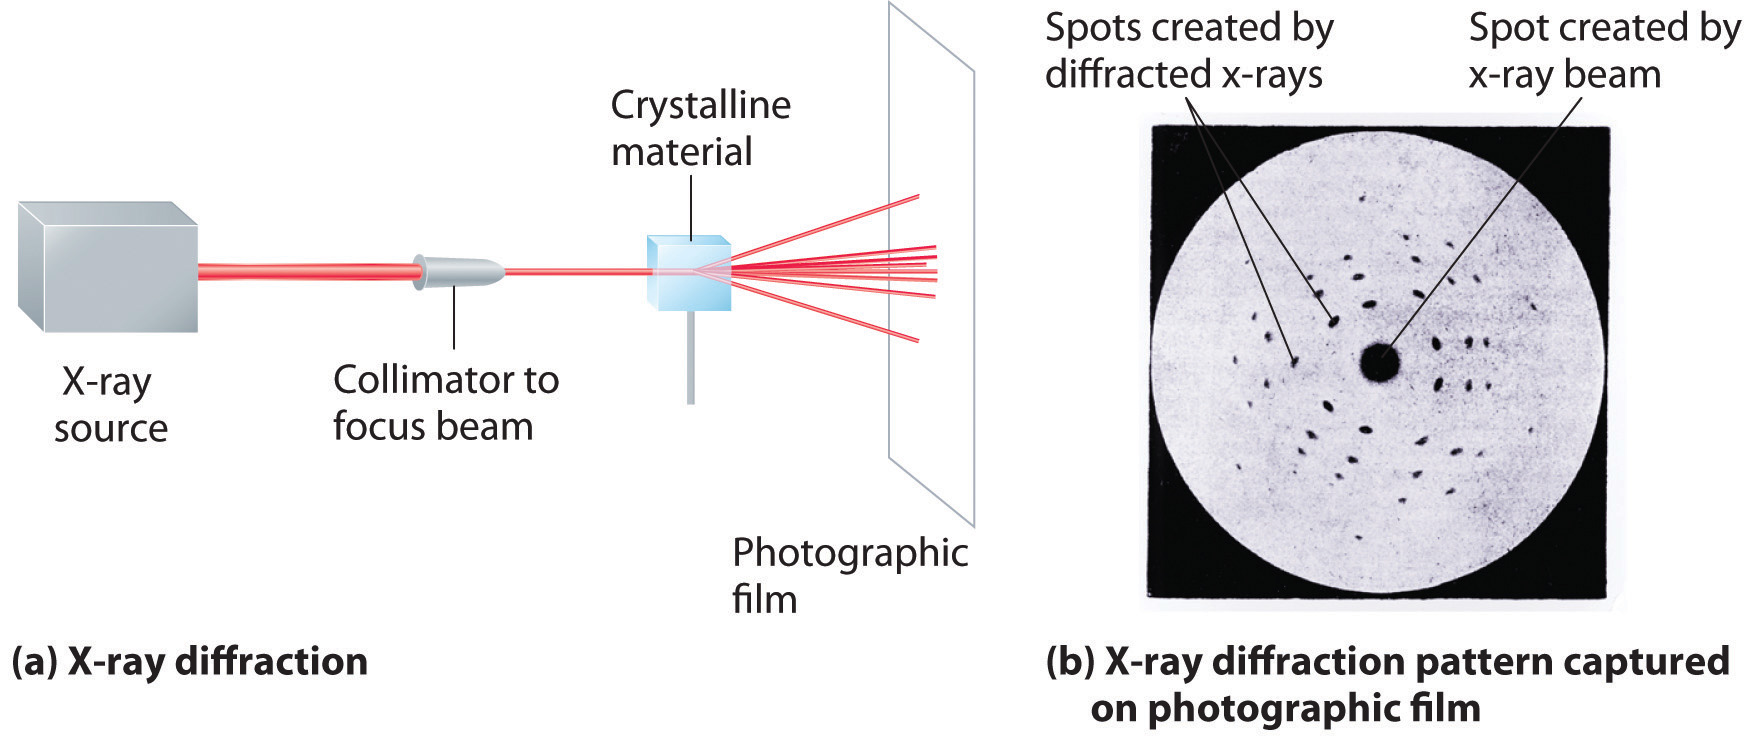 xray diffraction peak table